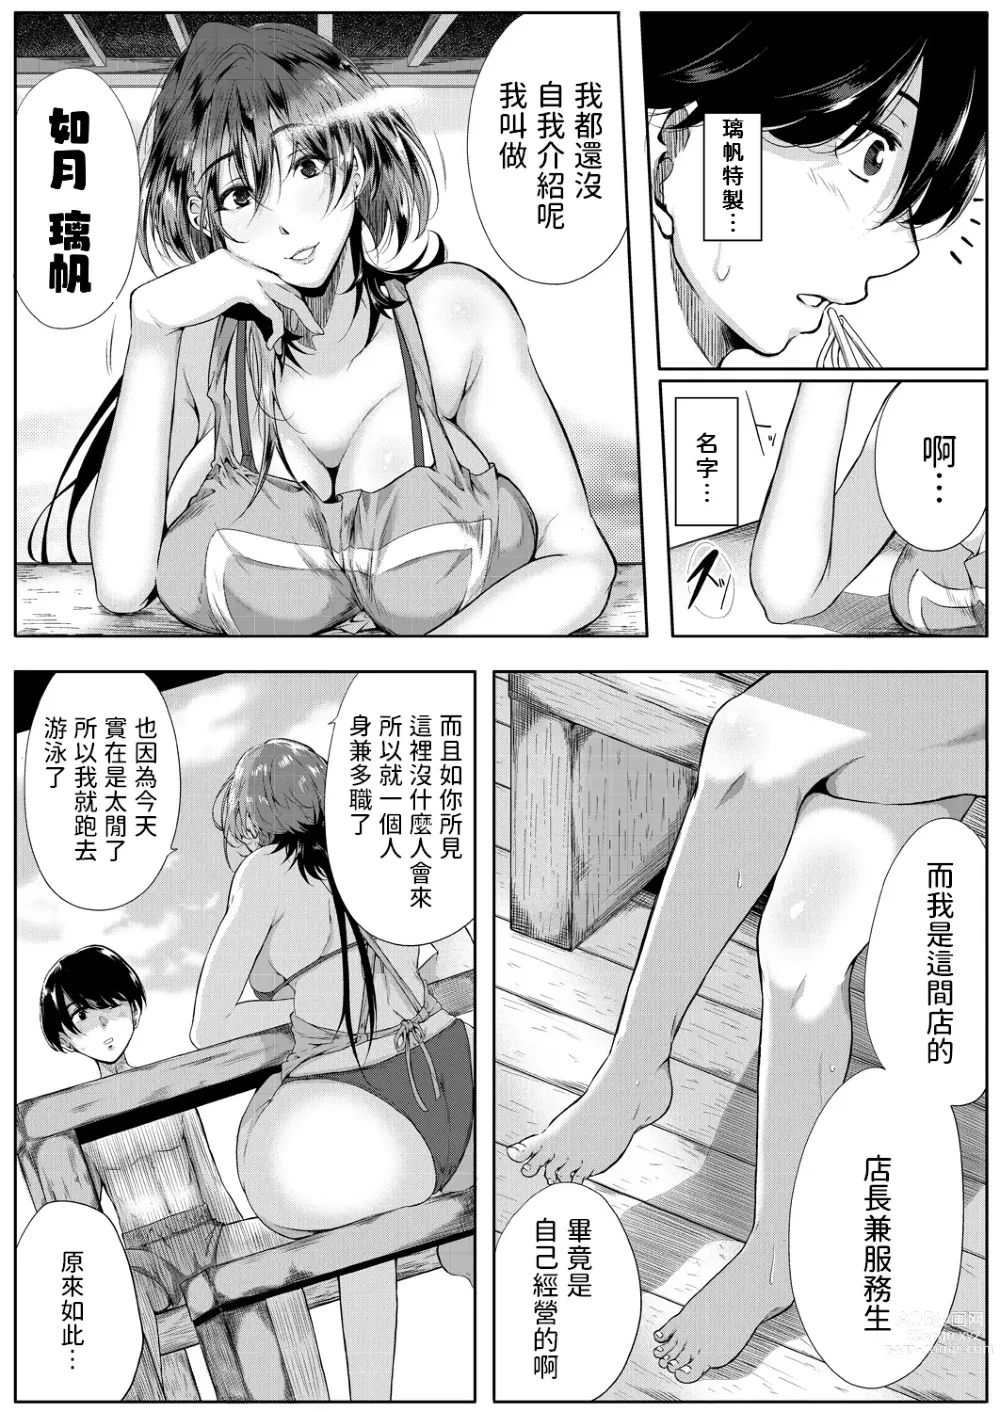 Page 7 of manga Strawberry Mermaid